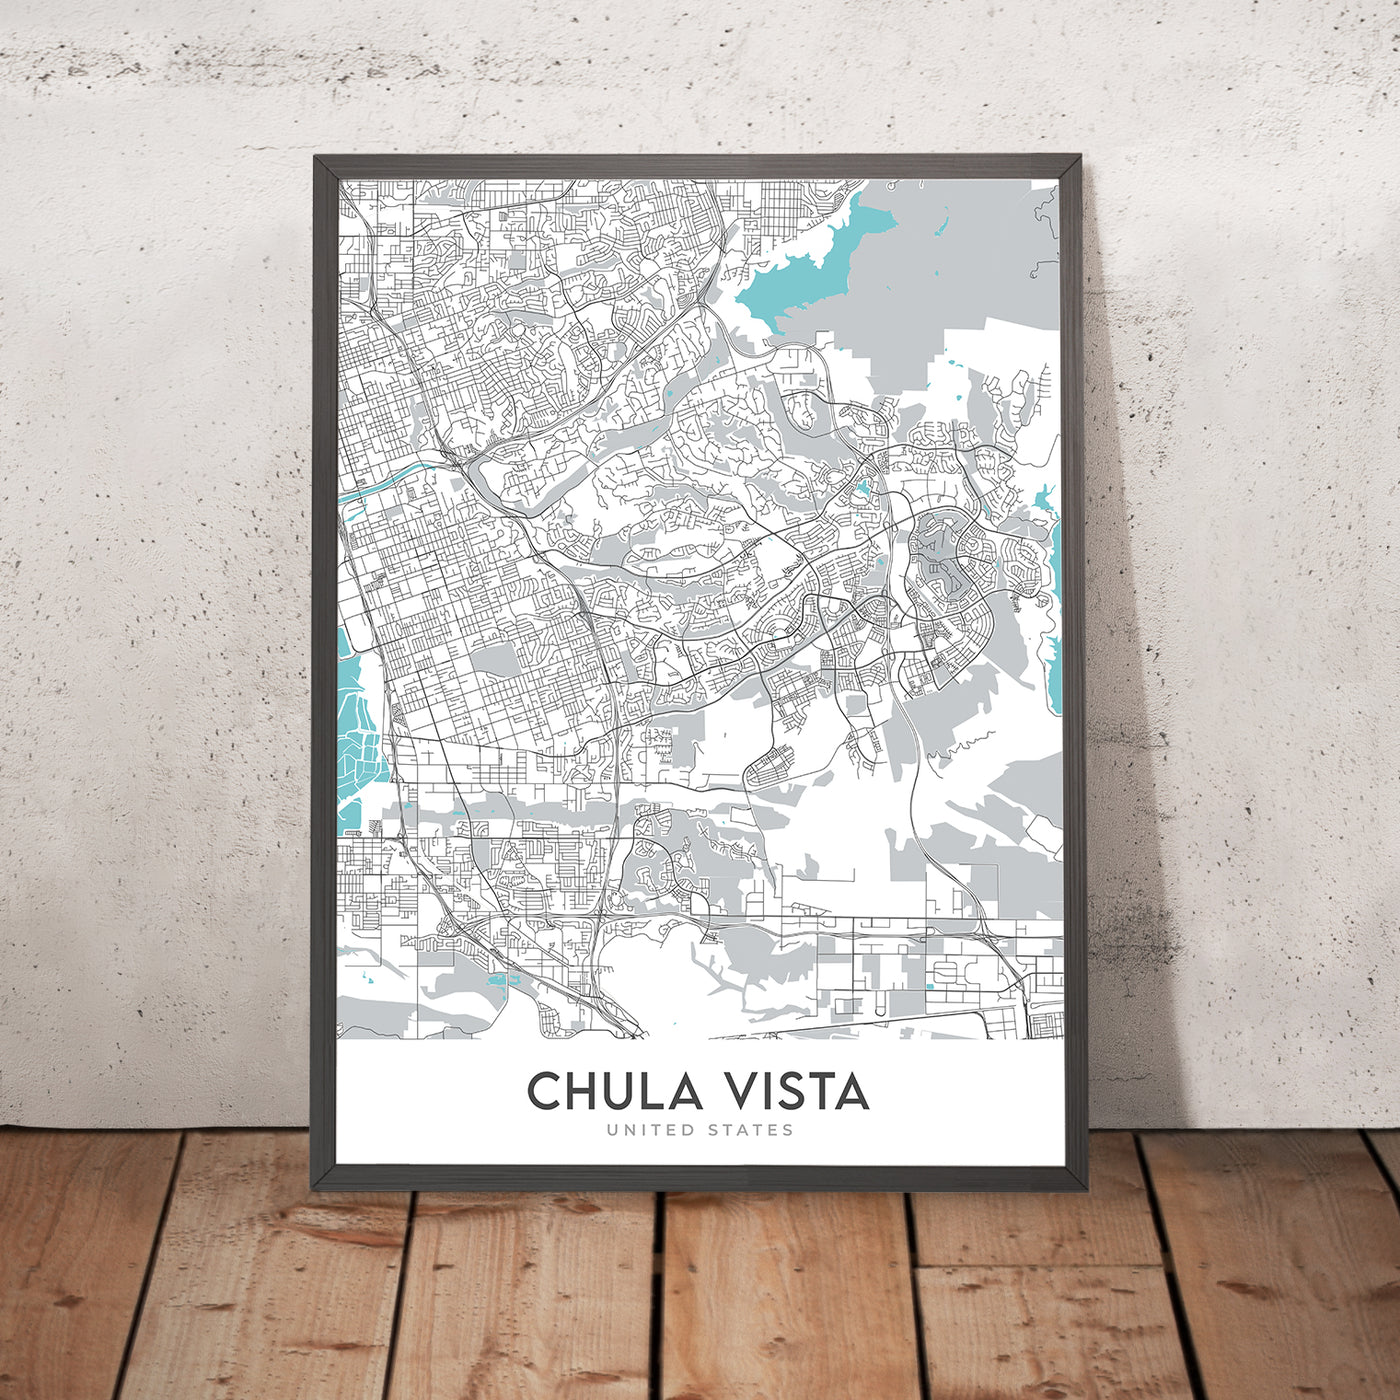 Modern City Map of Chula Vista, CA: Castle Park, Eastlake, Interstate 5, Interstate 805, San Diego Bay